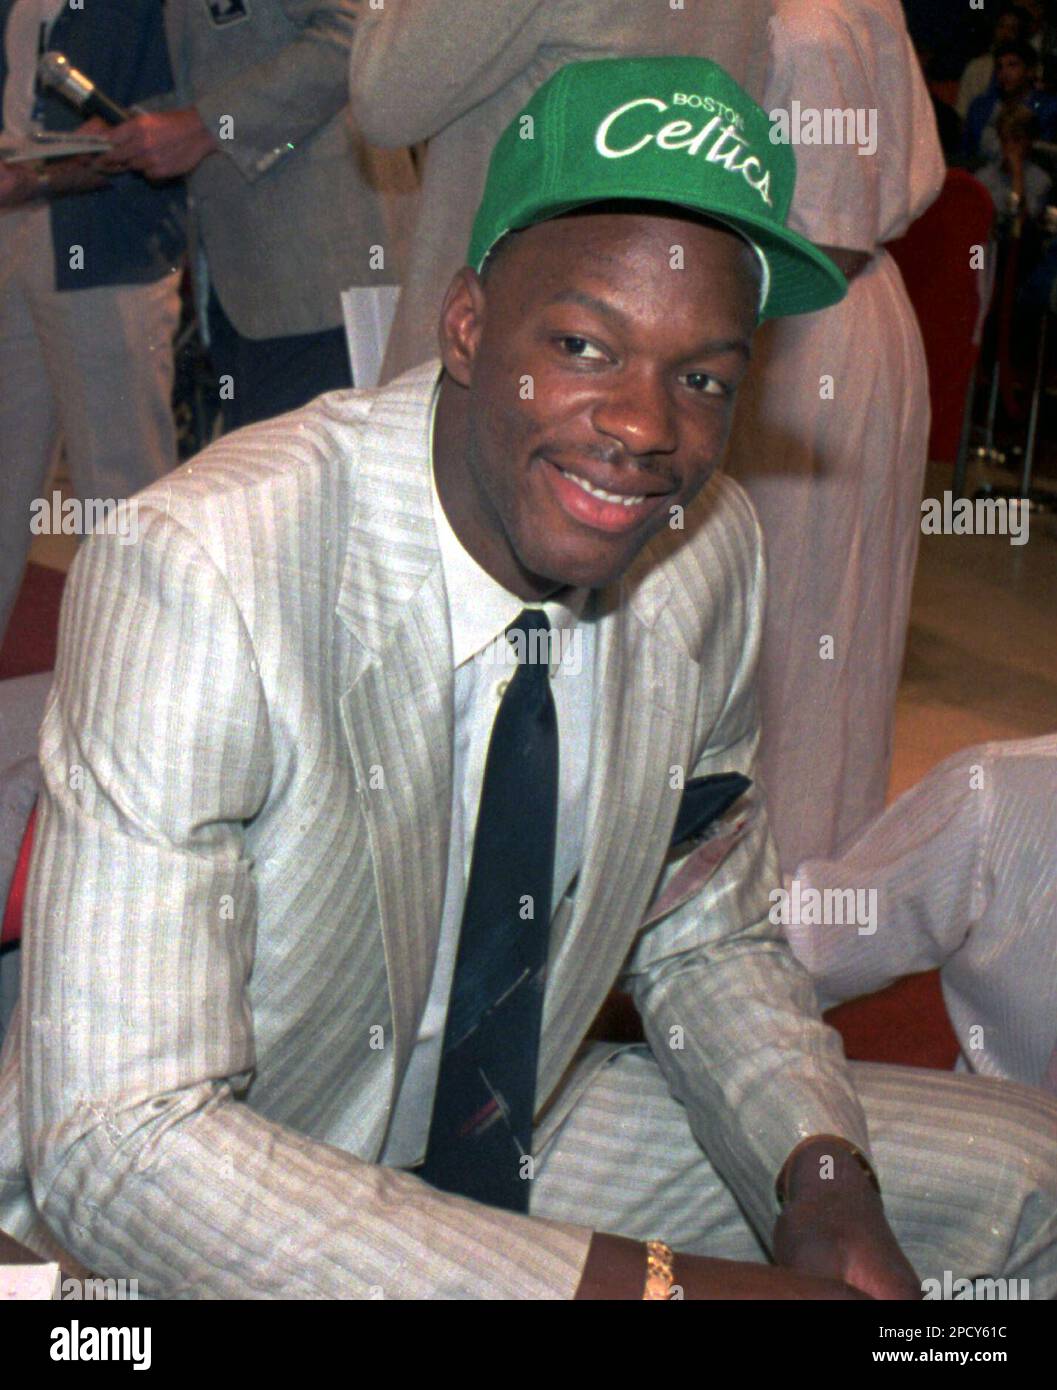 1986 Len Bias Draft Day Worn Suit Celtics Jersey 1986 Len Bias